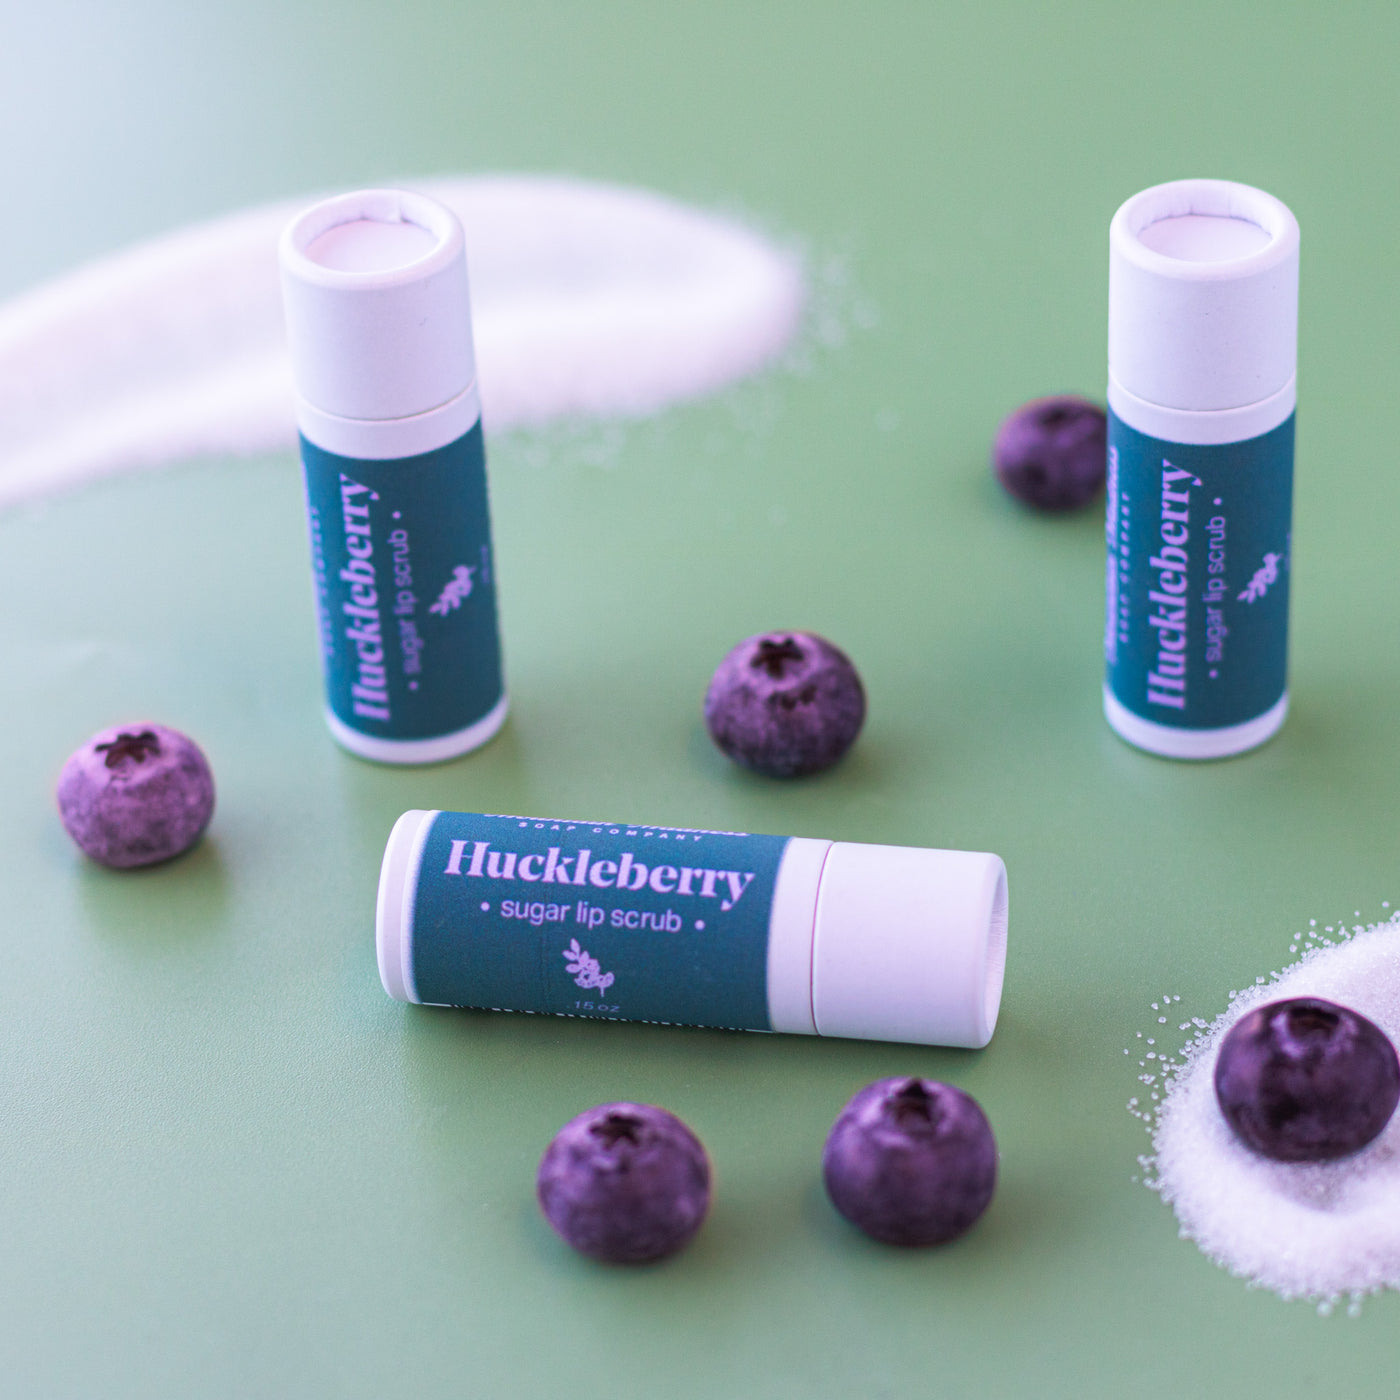 Huckleberry Sugar Lip Scrub